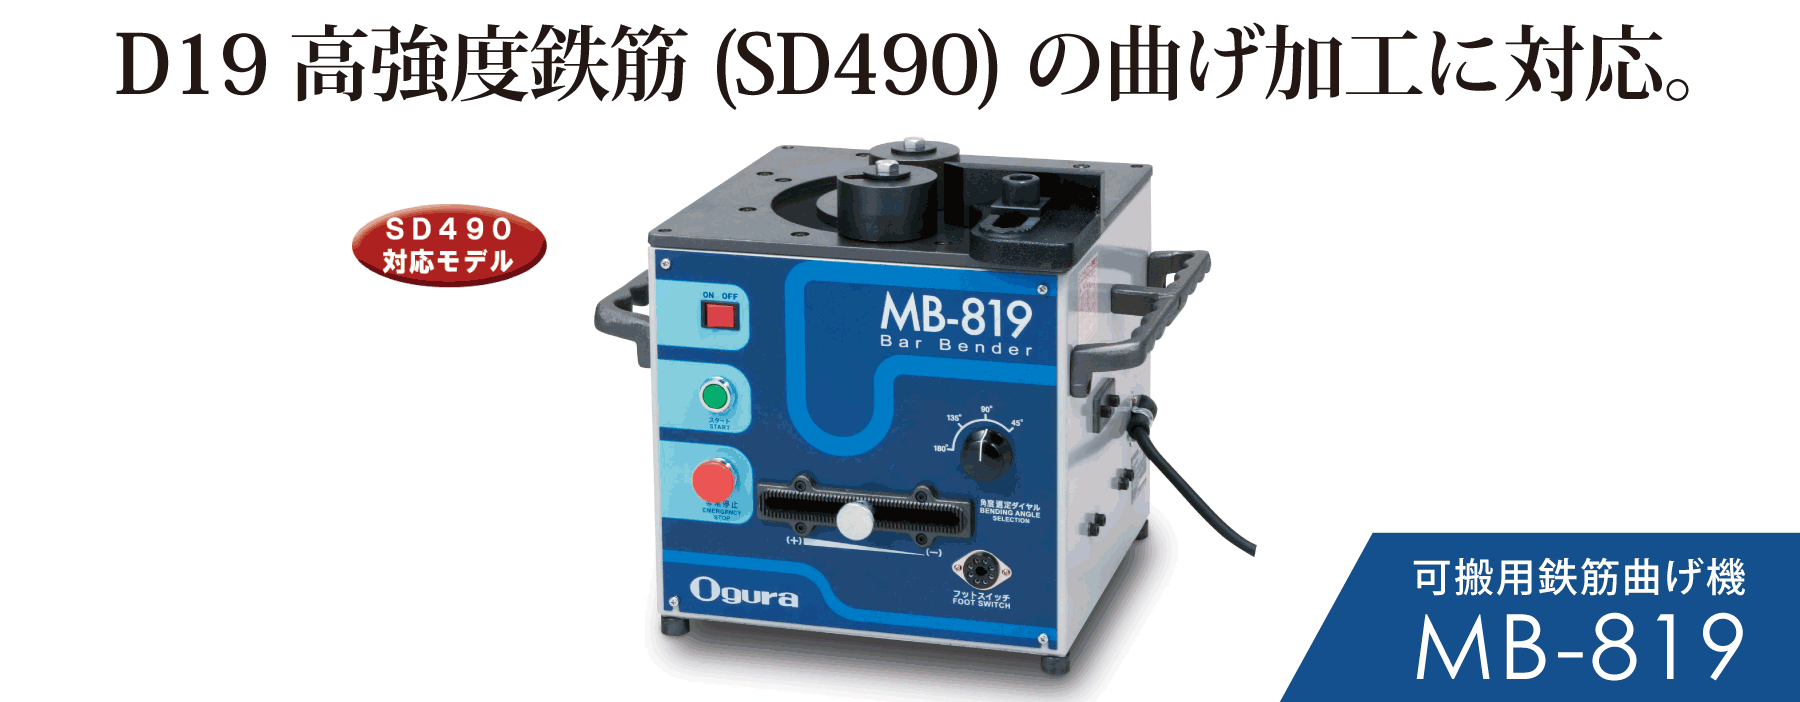 MB-819製品紹介 PC